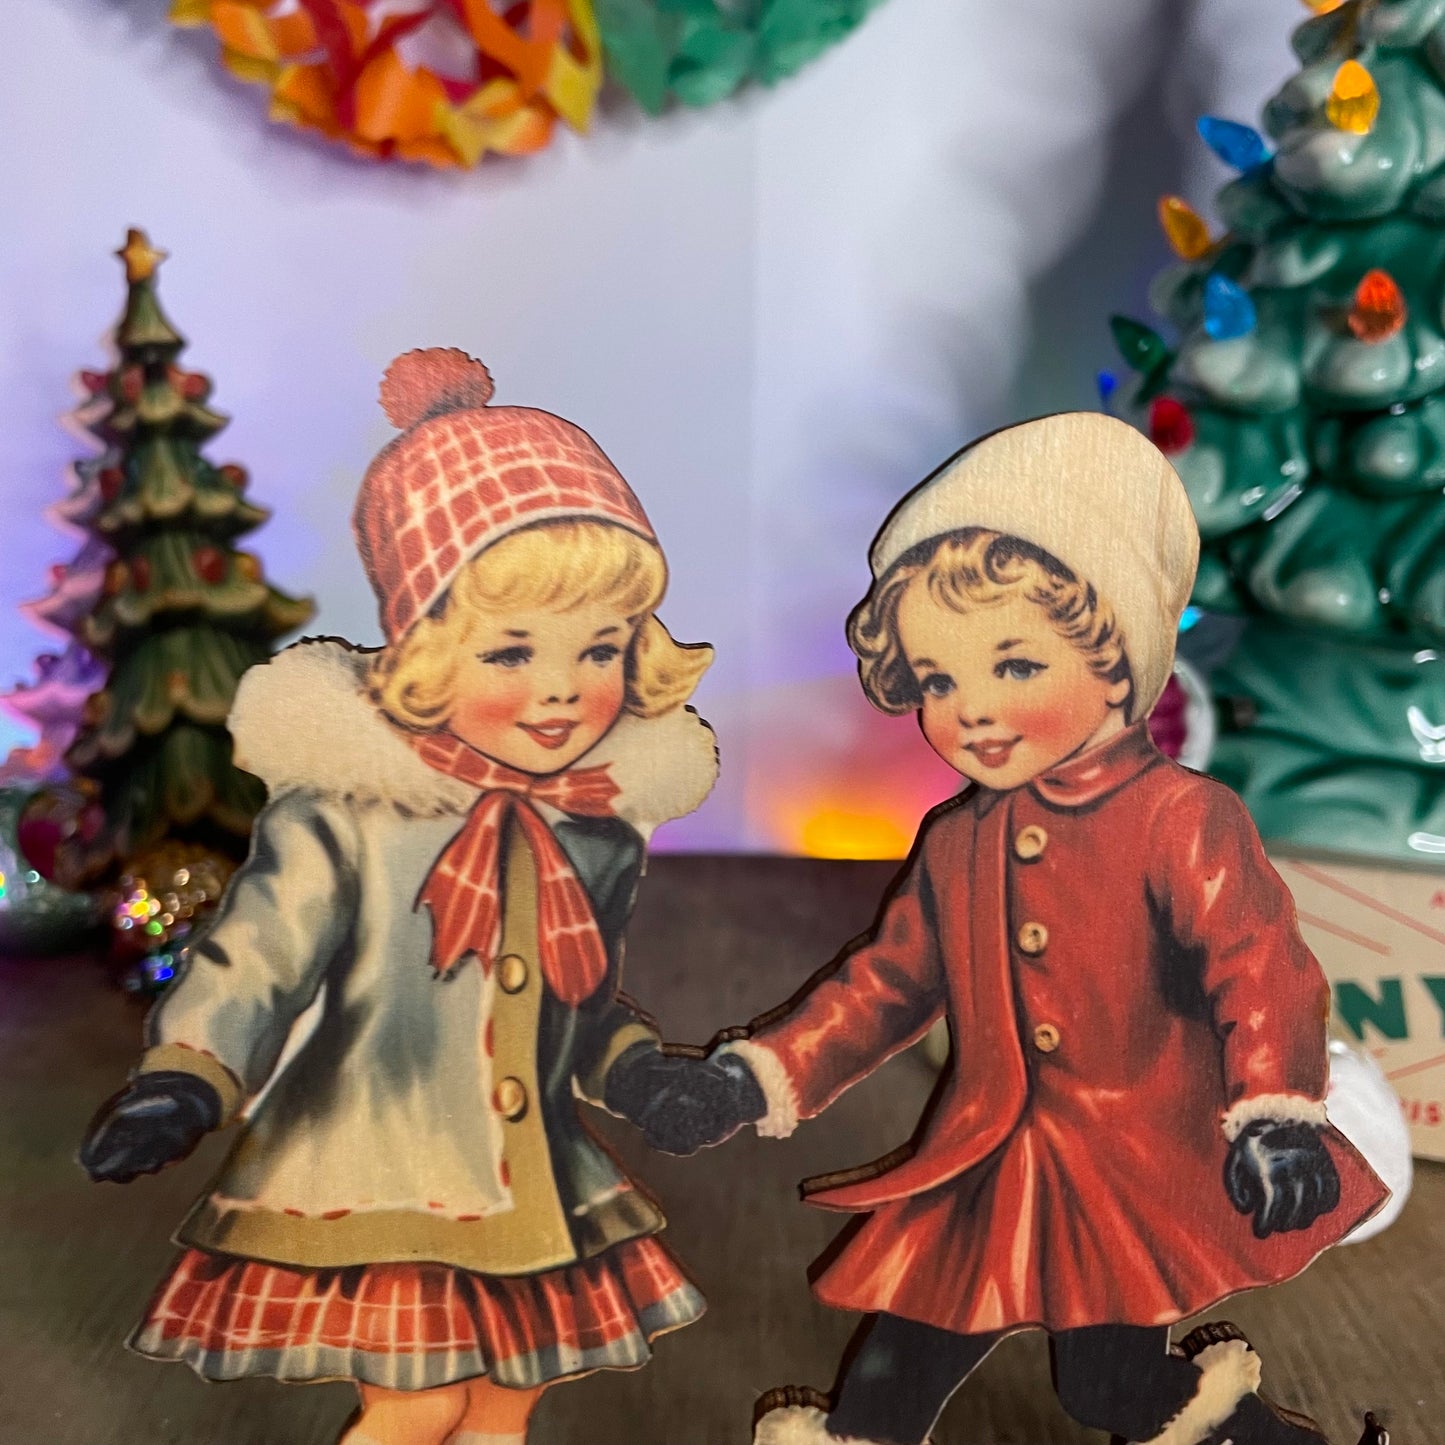 Vintage Christmas Decoration wooden ornament, holiday decor, christmas decor laser cut unique Christmas